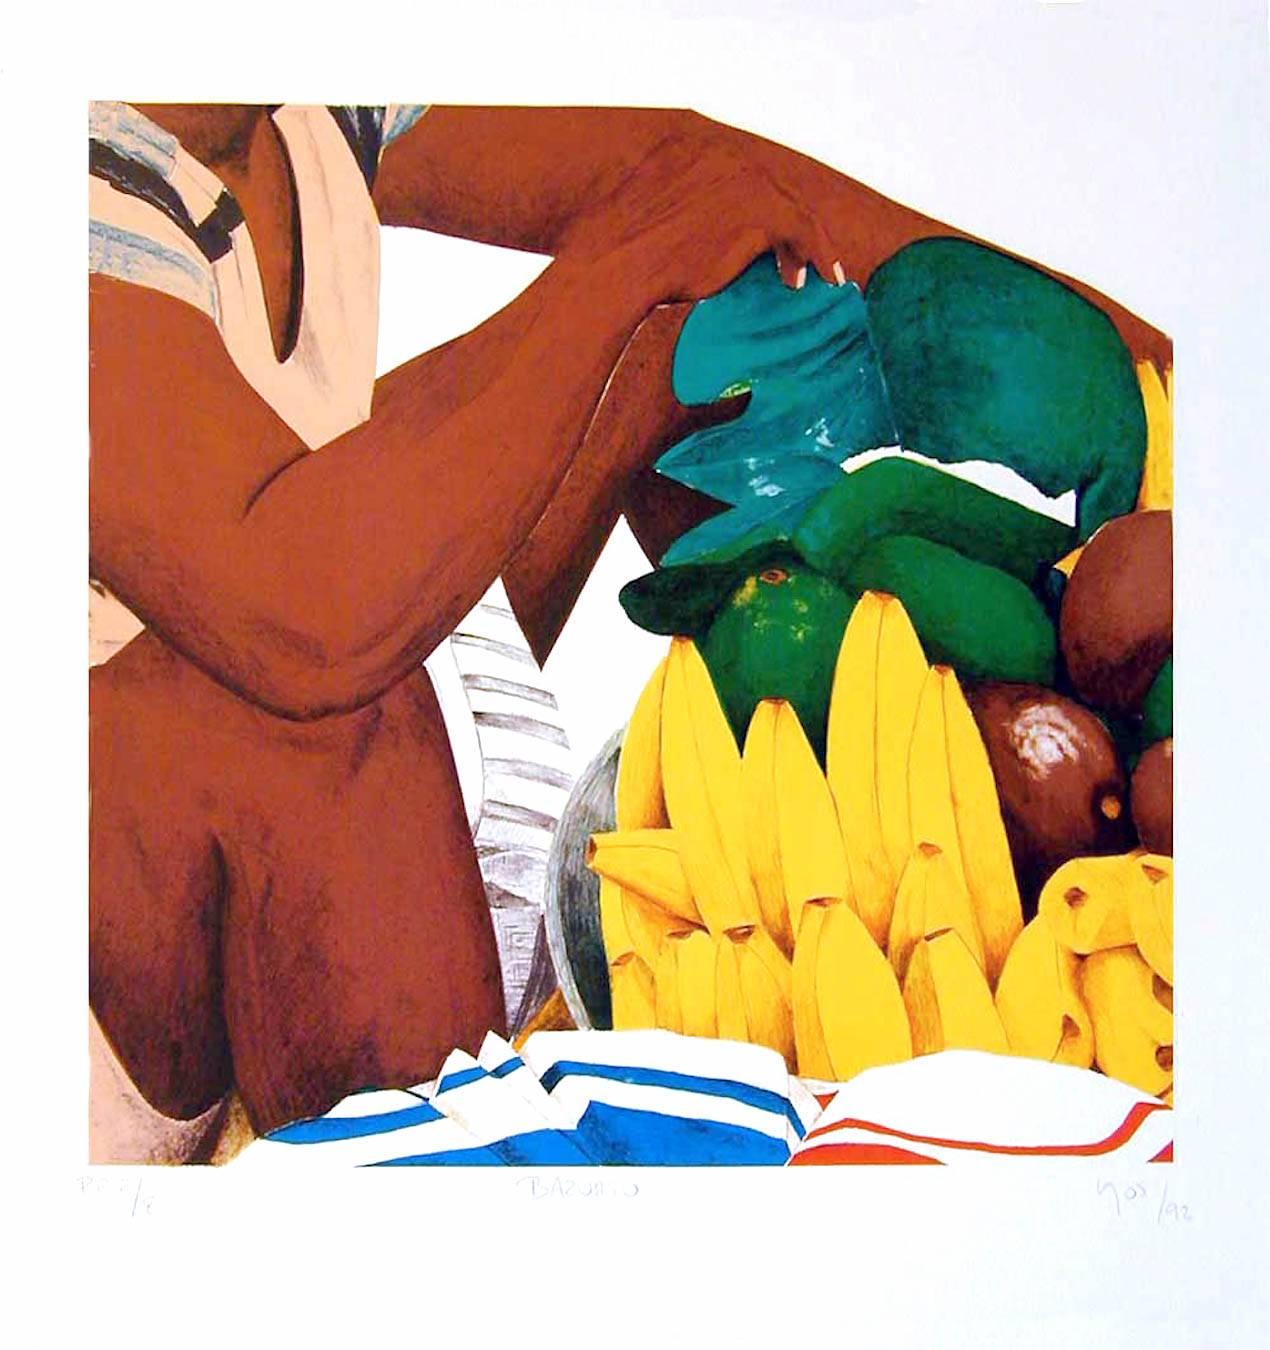 BAZURTO Cartagena Market, Signed Lithograph, Bananas, Avocados, Latin American  - Print by Ana Mercedes Hoyos